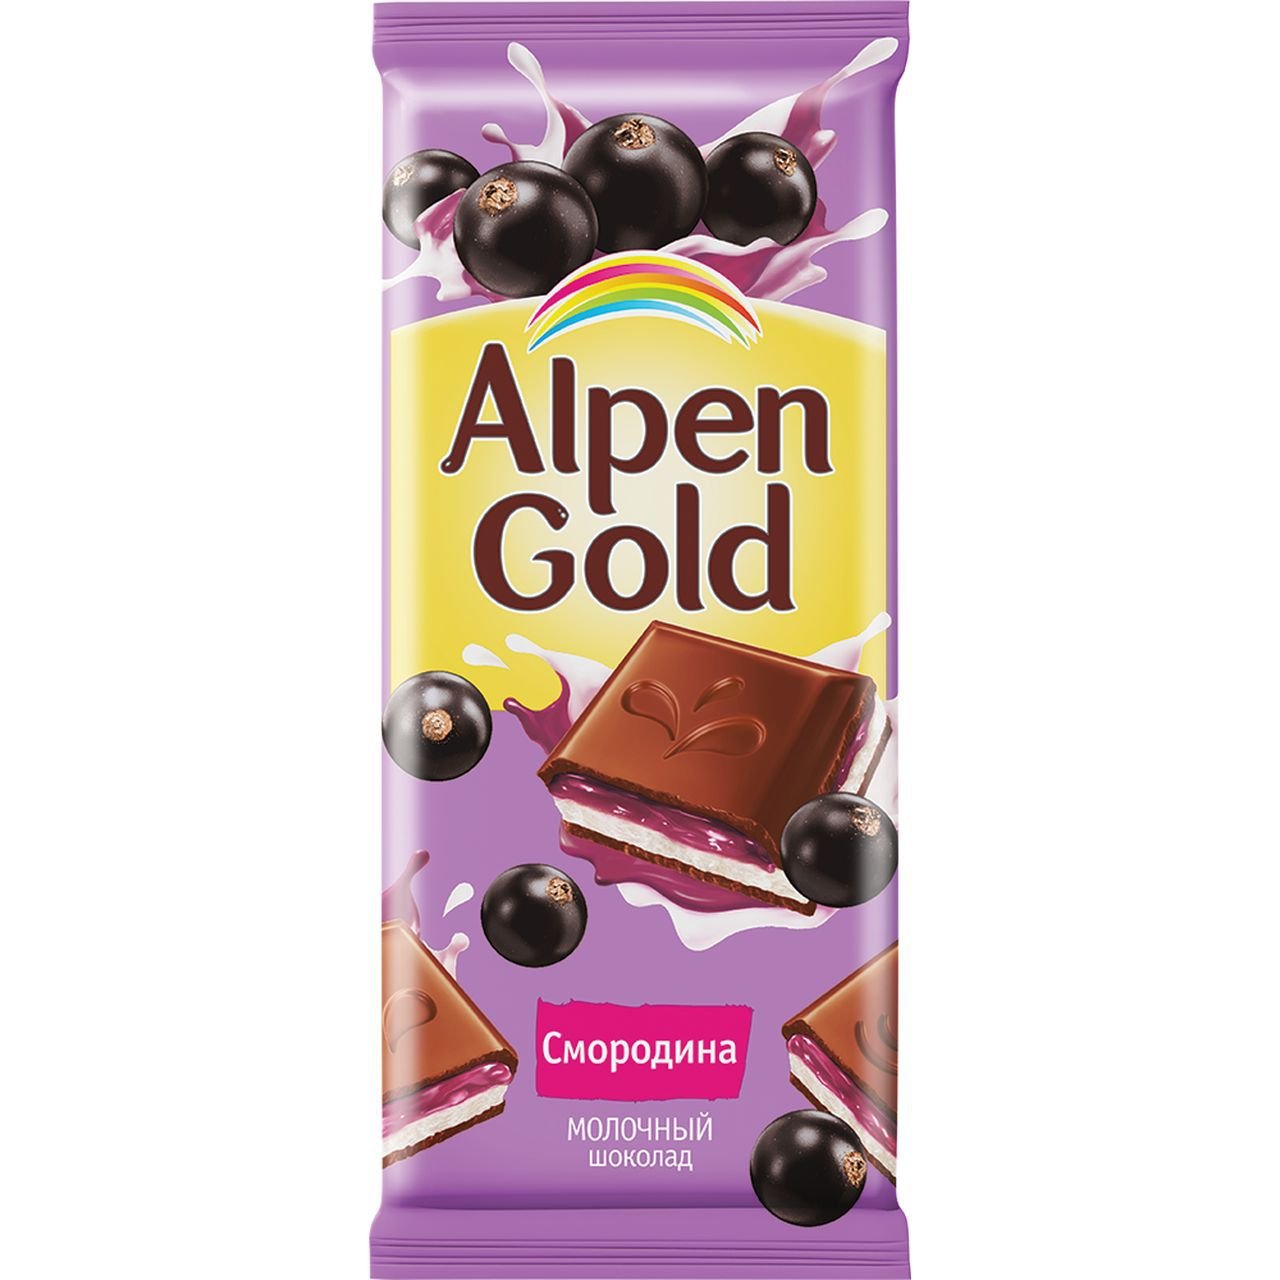 Анпенгольд шоколад. Шоколад Альпен Гольд молочный 85г/90г. Шоколад Alpen Gold молочный 90г. Шоколад Alpen Gold 85гр. Молочный. Альпен Гольд смородина шоколад.